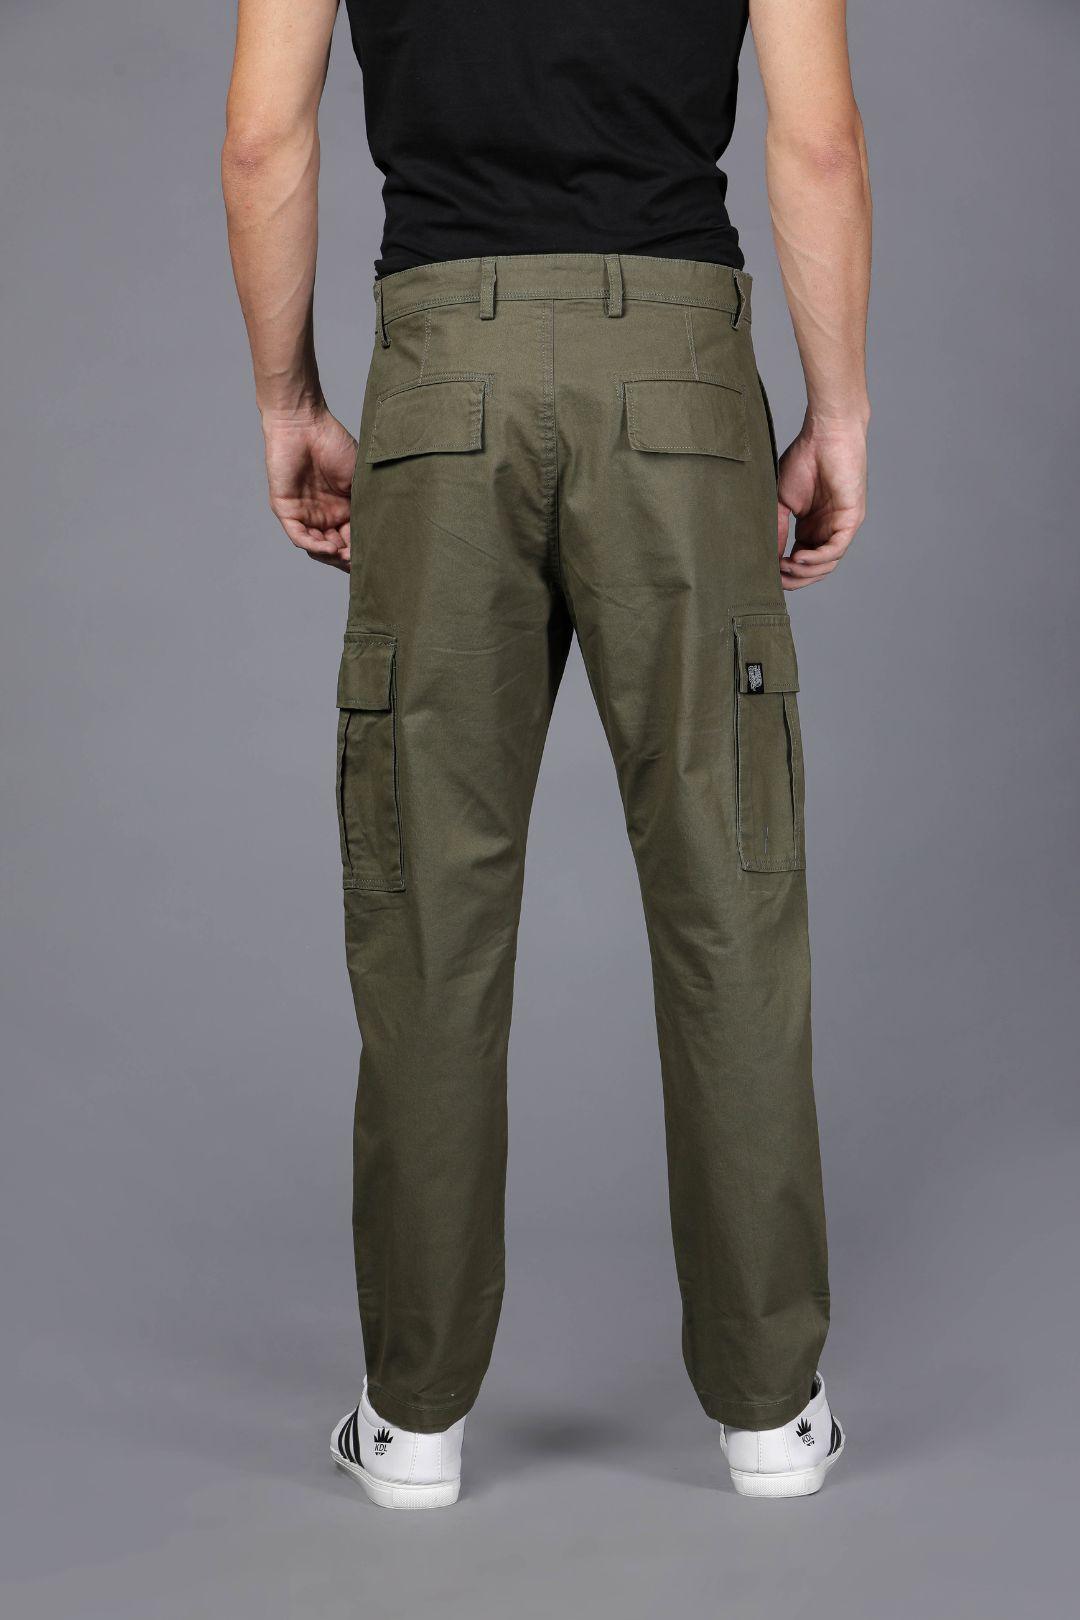 Buy JadeBlue Olive Green Slim Fit Trousers for Men Online  Tata CLiQ